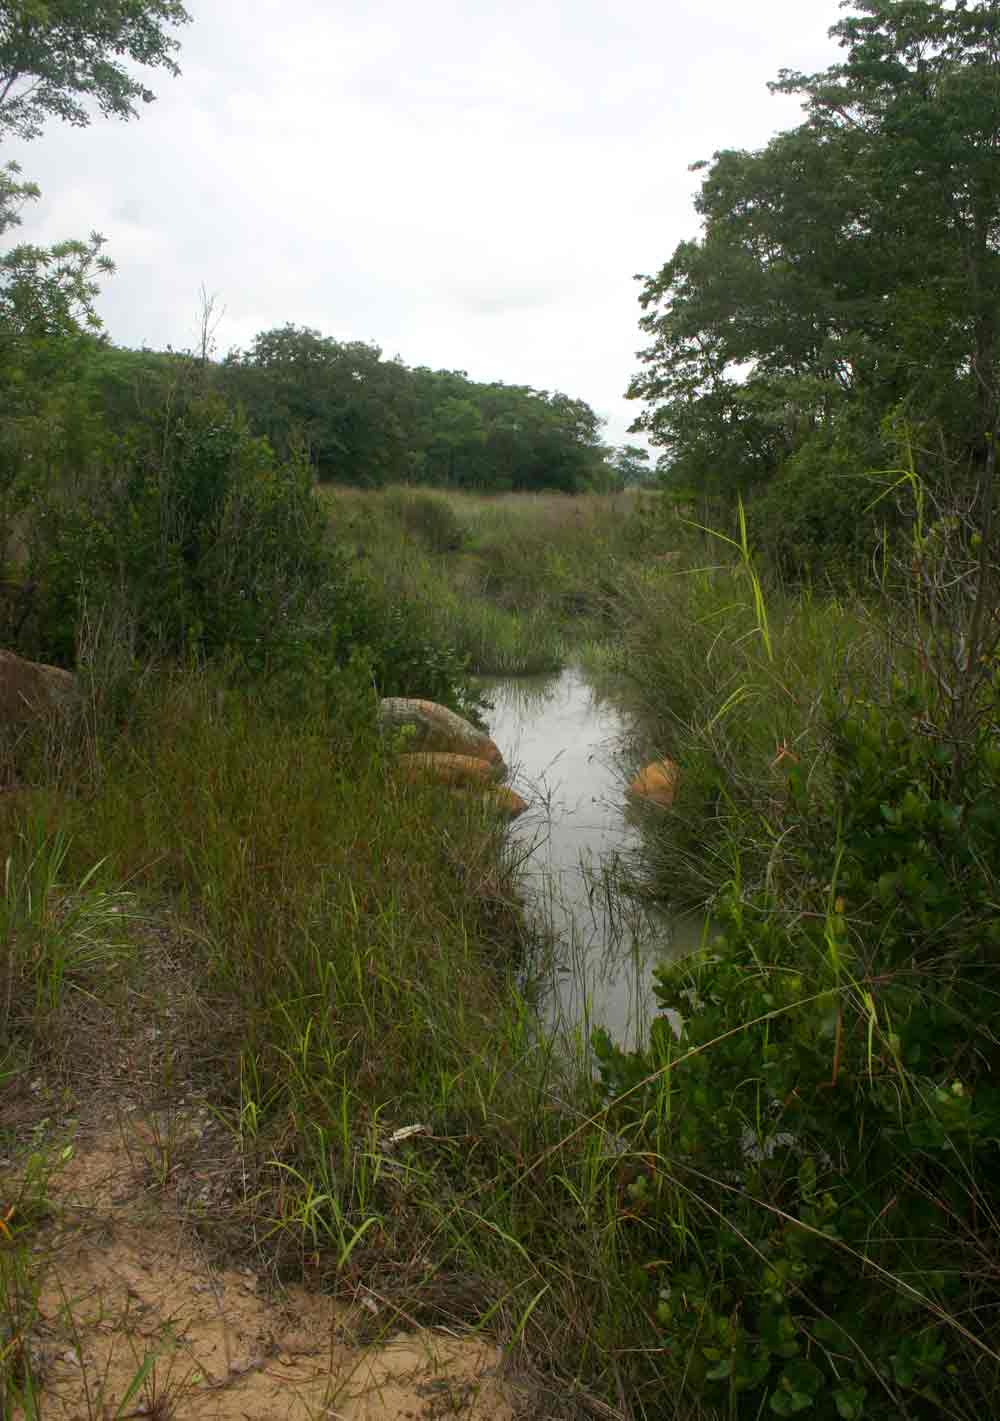 Marshy vegetation along a narrow branch of the dam